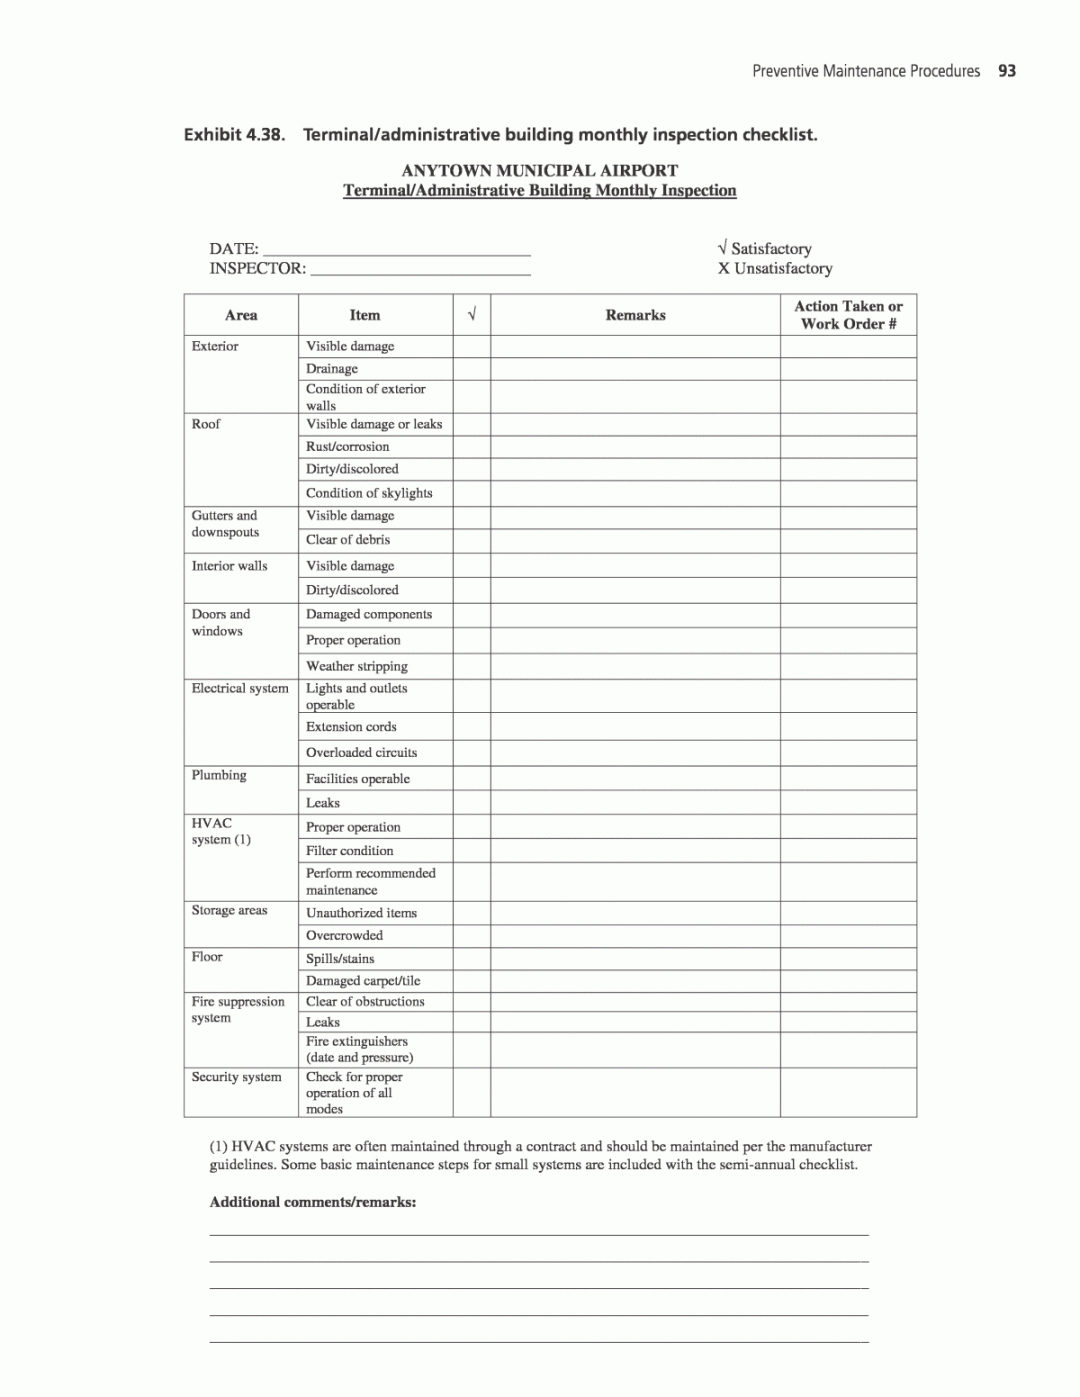 hotel room maintenance checklist pdf guest preventive daily hotel preventive maintenance checklist template samples